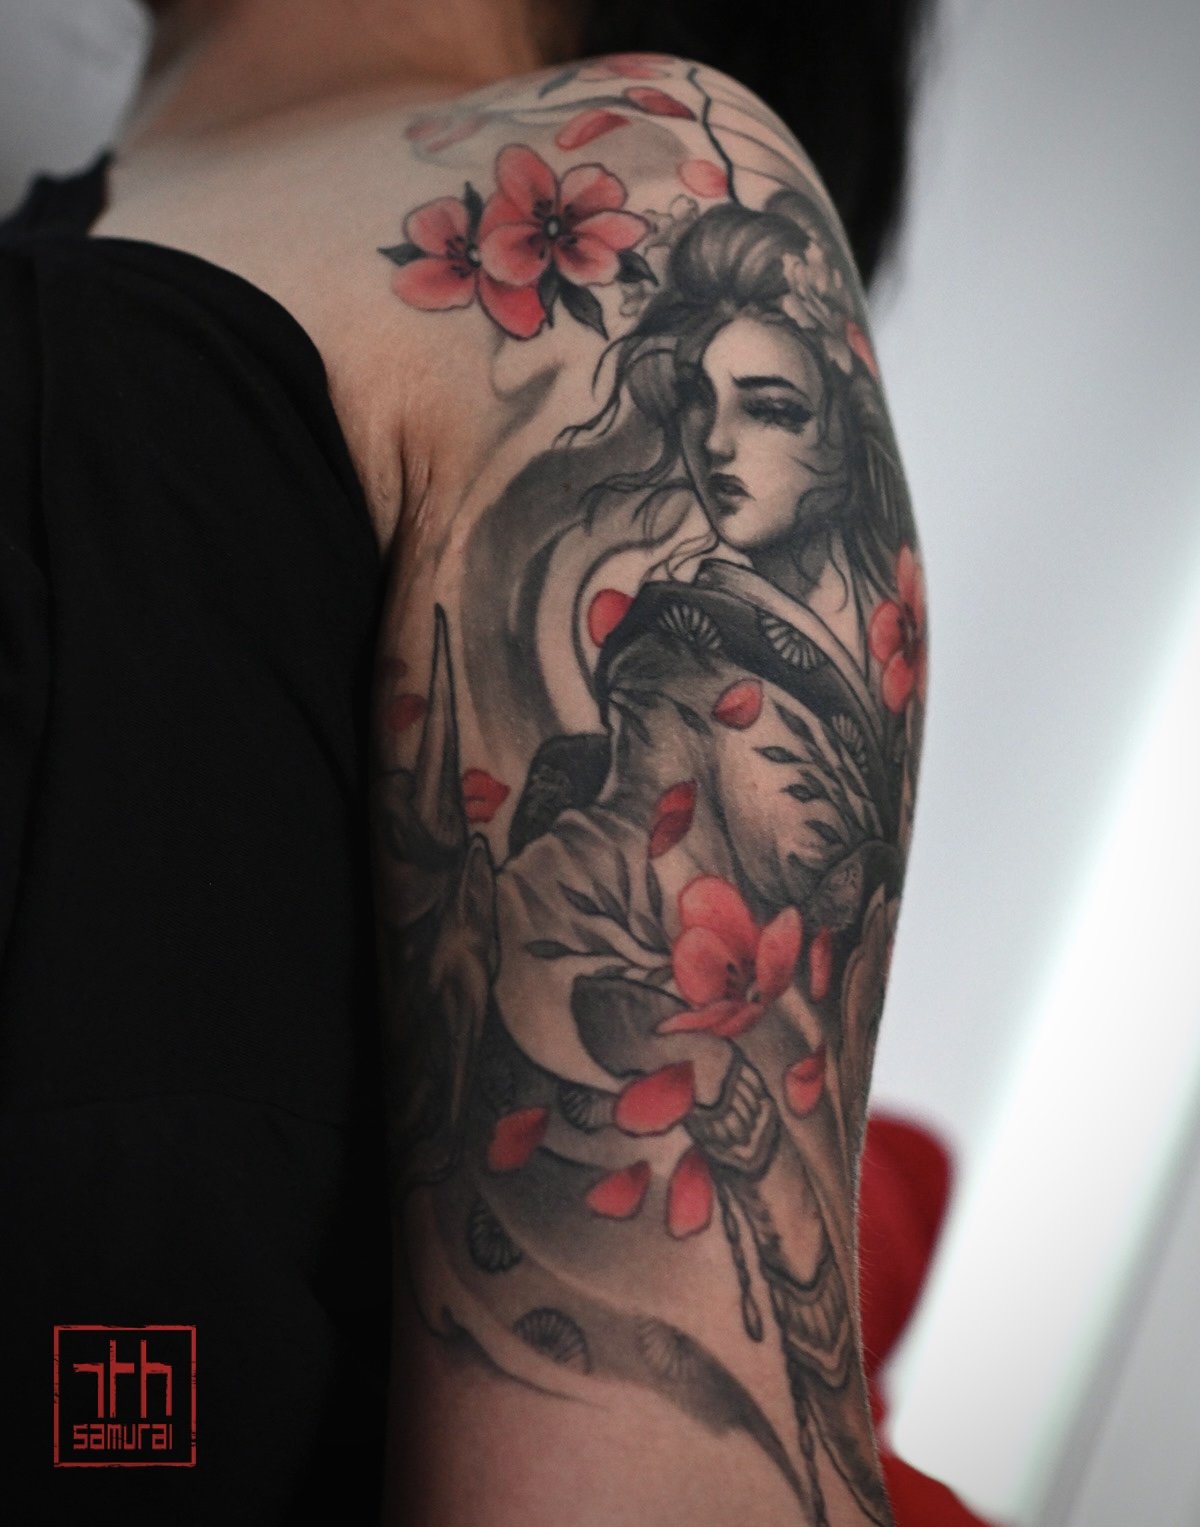 Geisha hannya mask elephant  Women's half sleeve neo japanese asian sleeve tattoo with red highlights cherry blossoms  asian artist: Kai 7th Samurai. YEG Edmonton, Alberta, Canada 2023 best 2024 